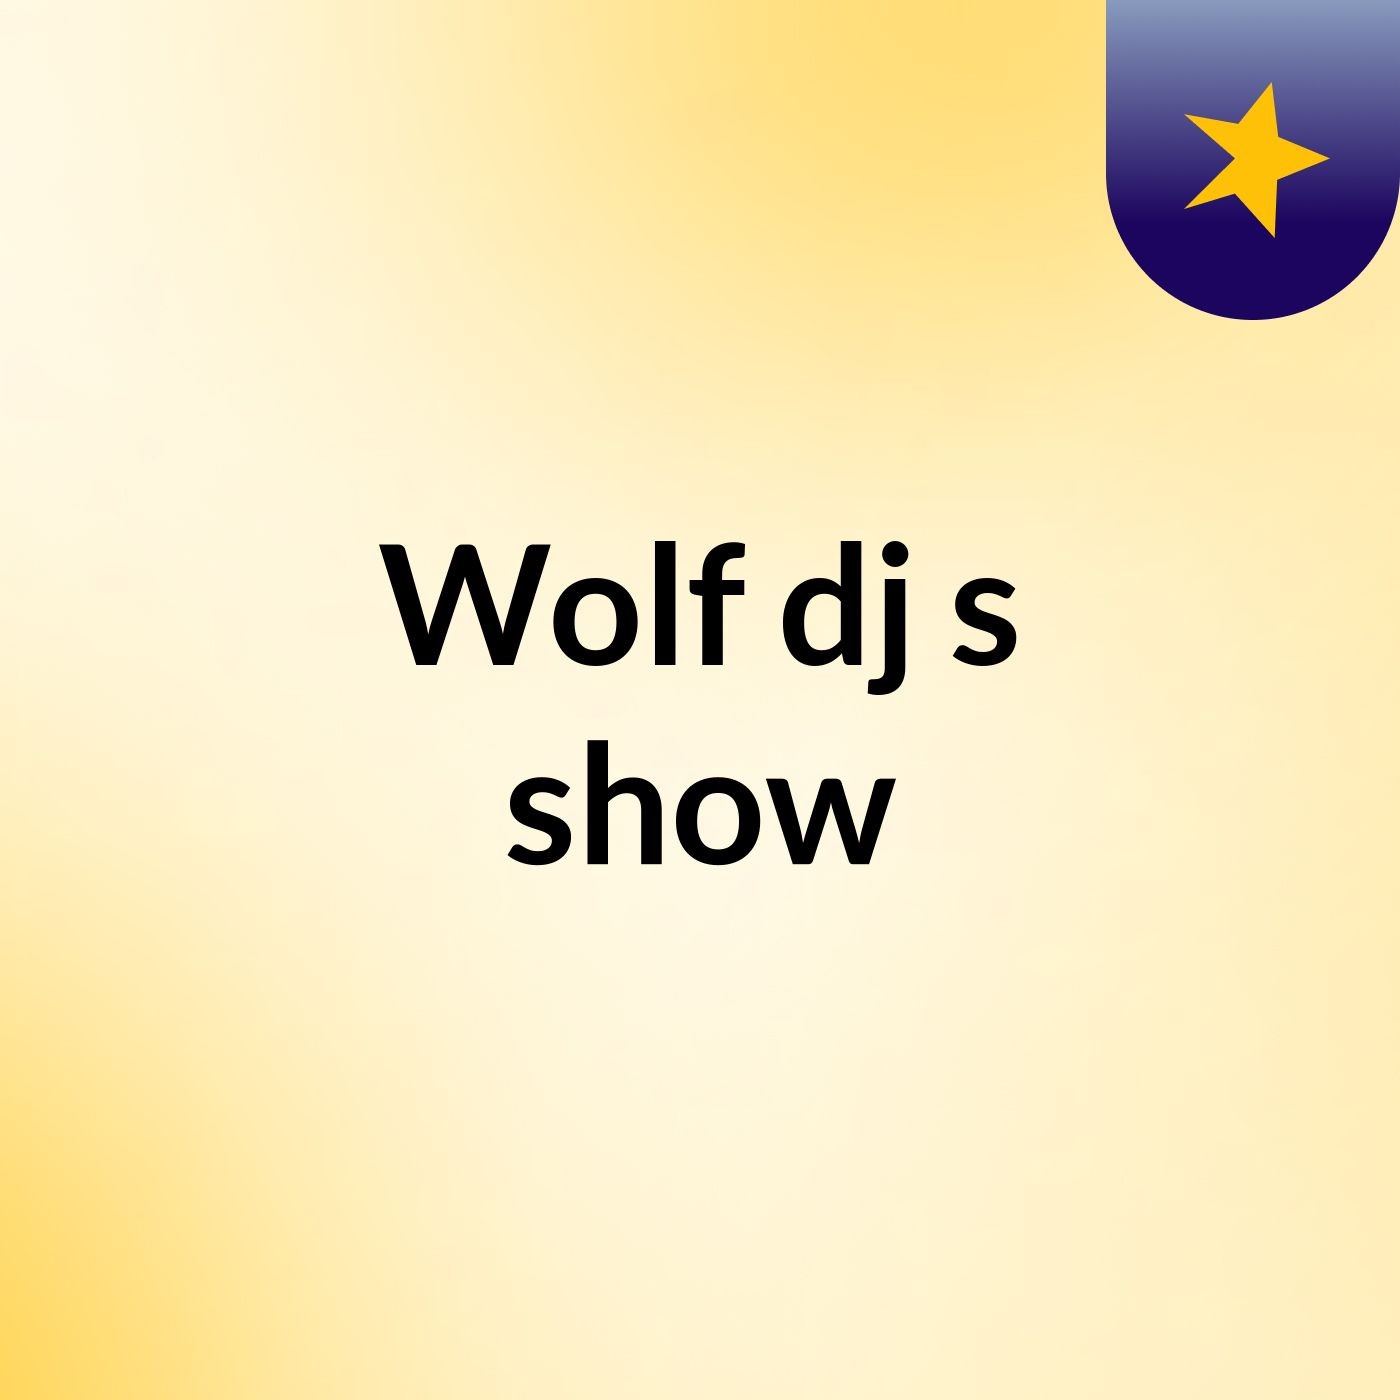 Wolf dj's show